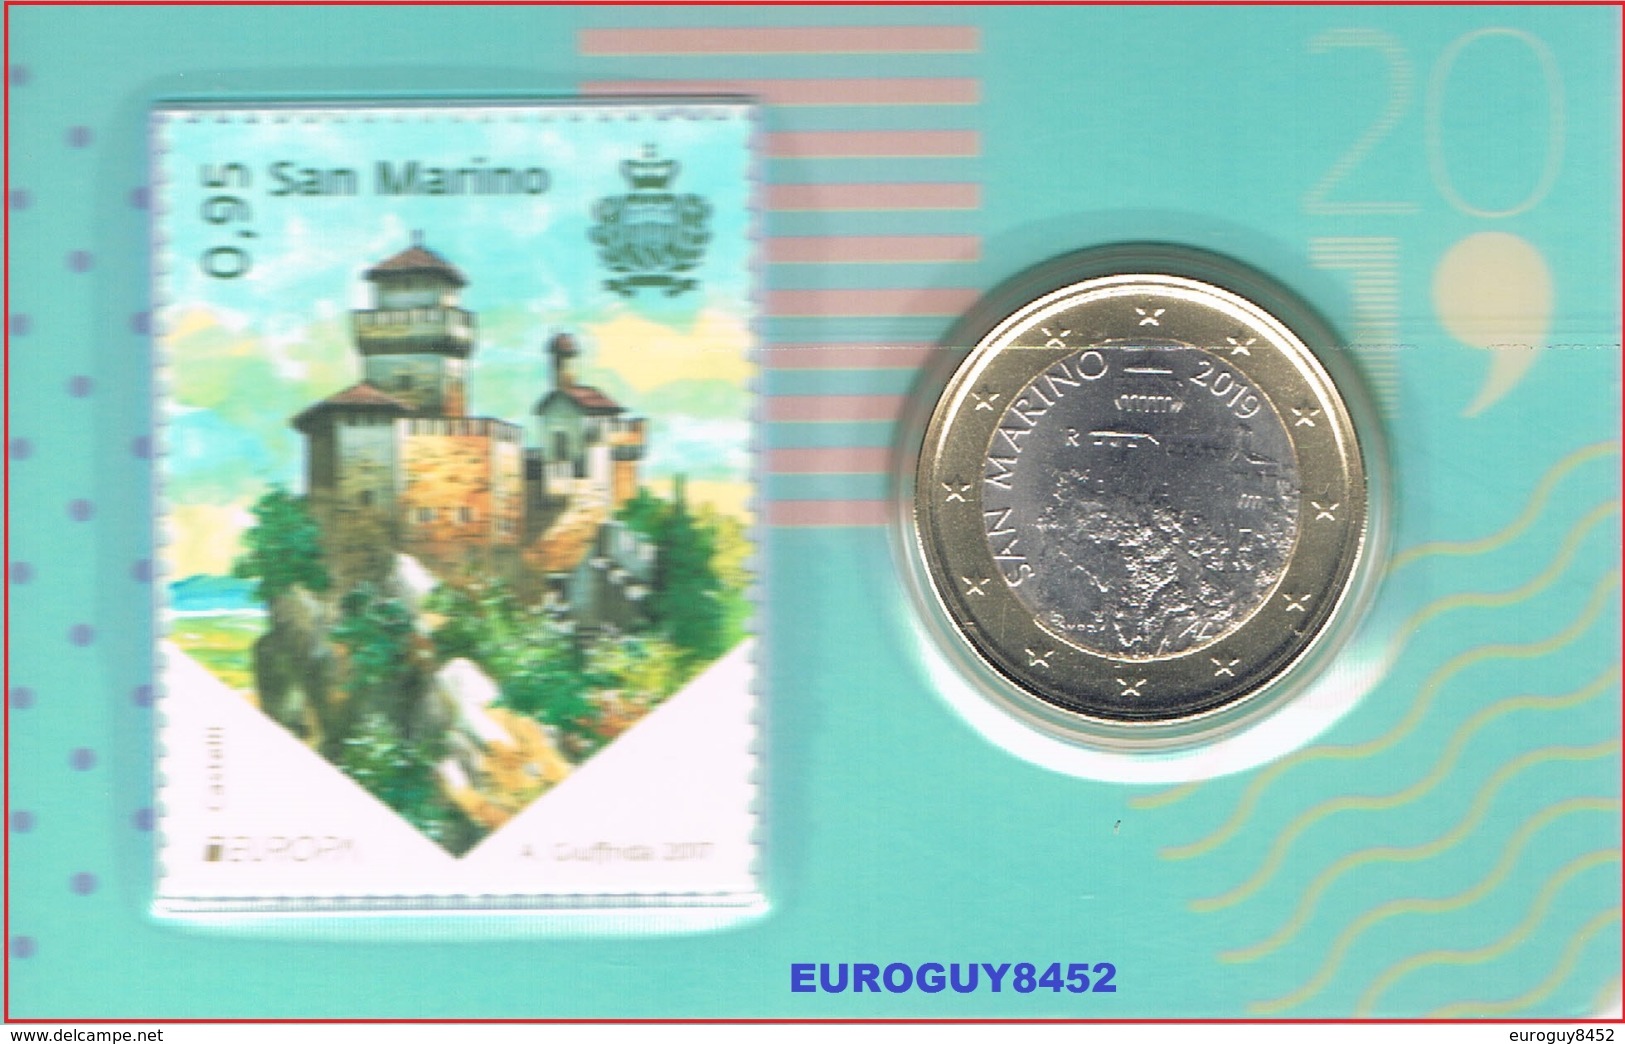 SAN MARINO - COINCARD NR 3 - 1 € 2019 BU + POSTZEGEL - San Marino